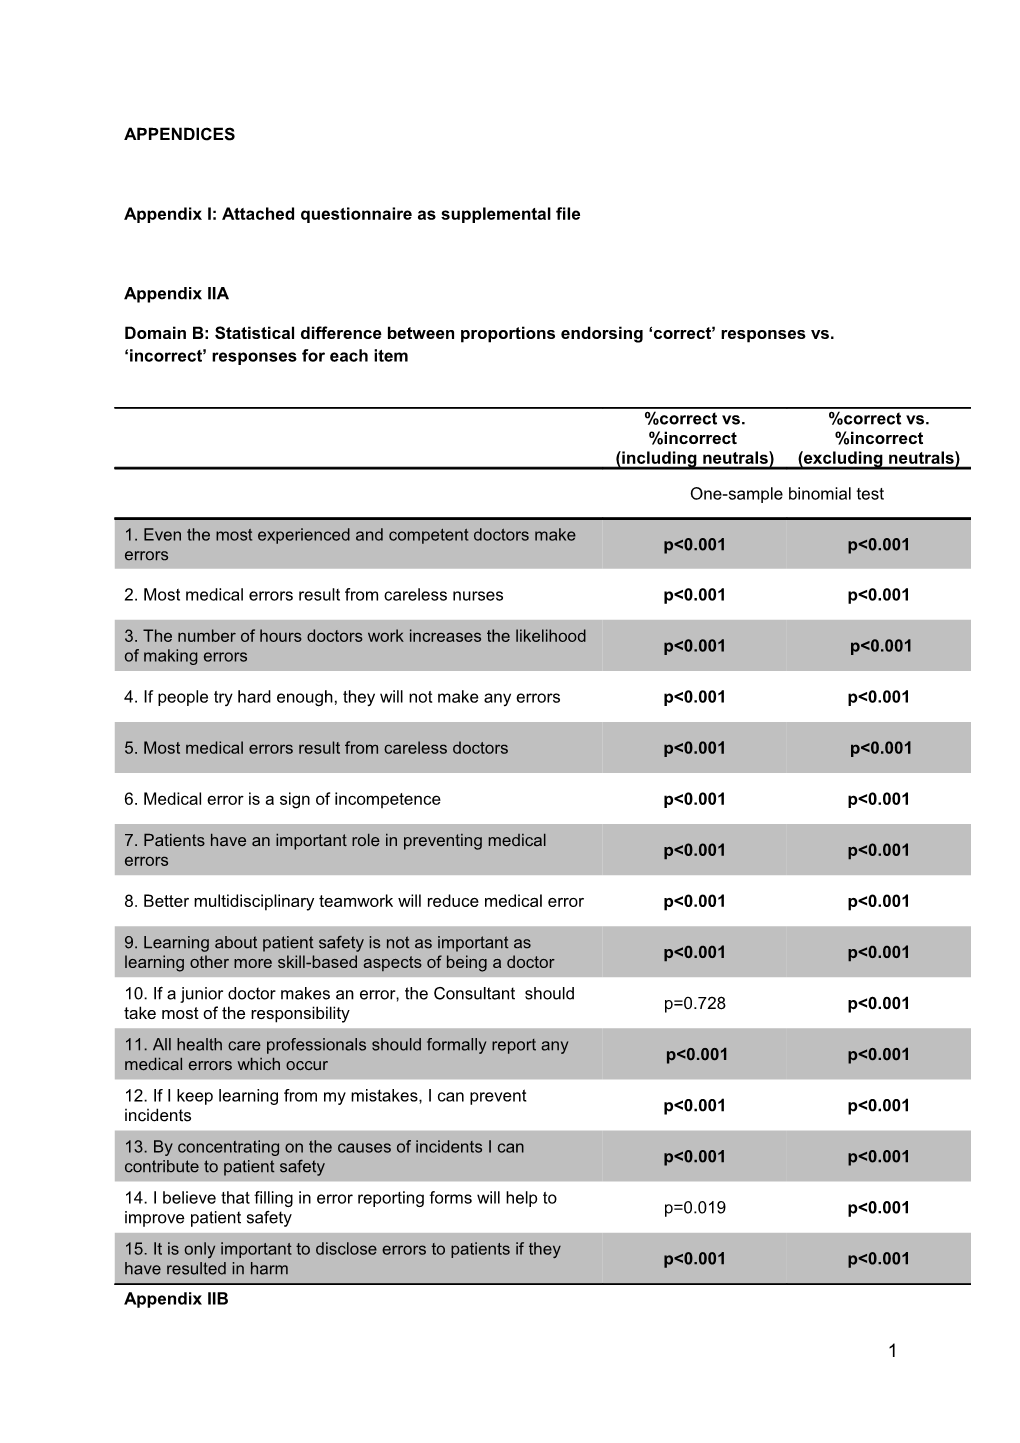 Appendix I: Attached Questionnaire As Supplemental File